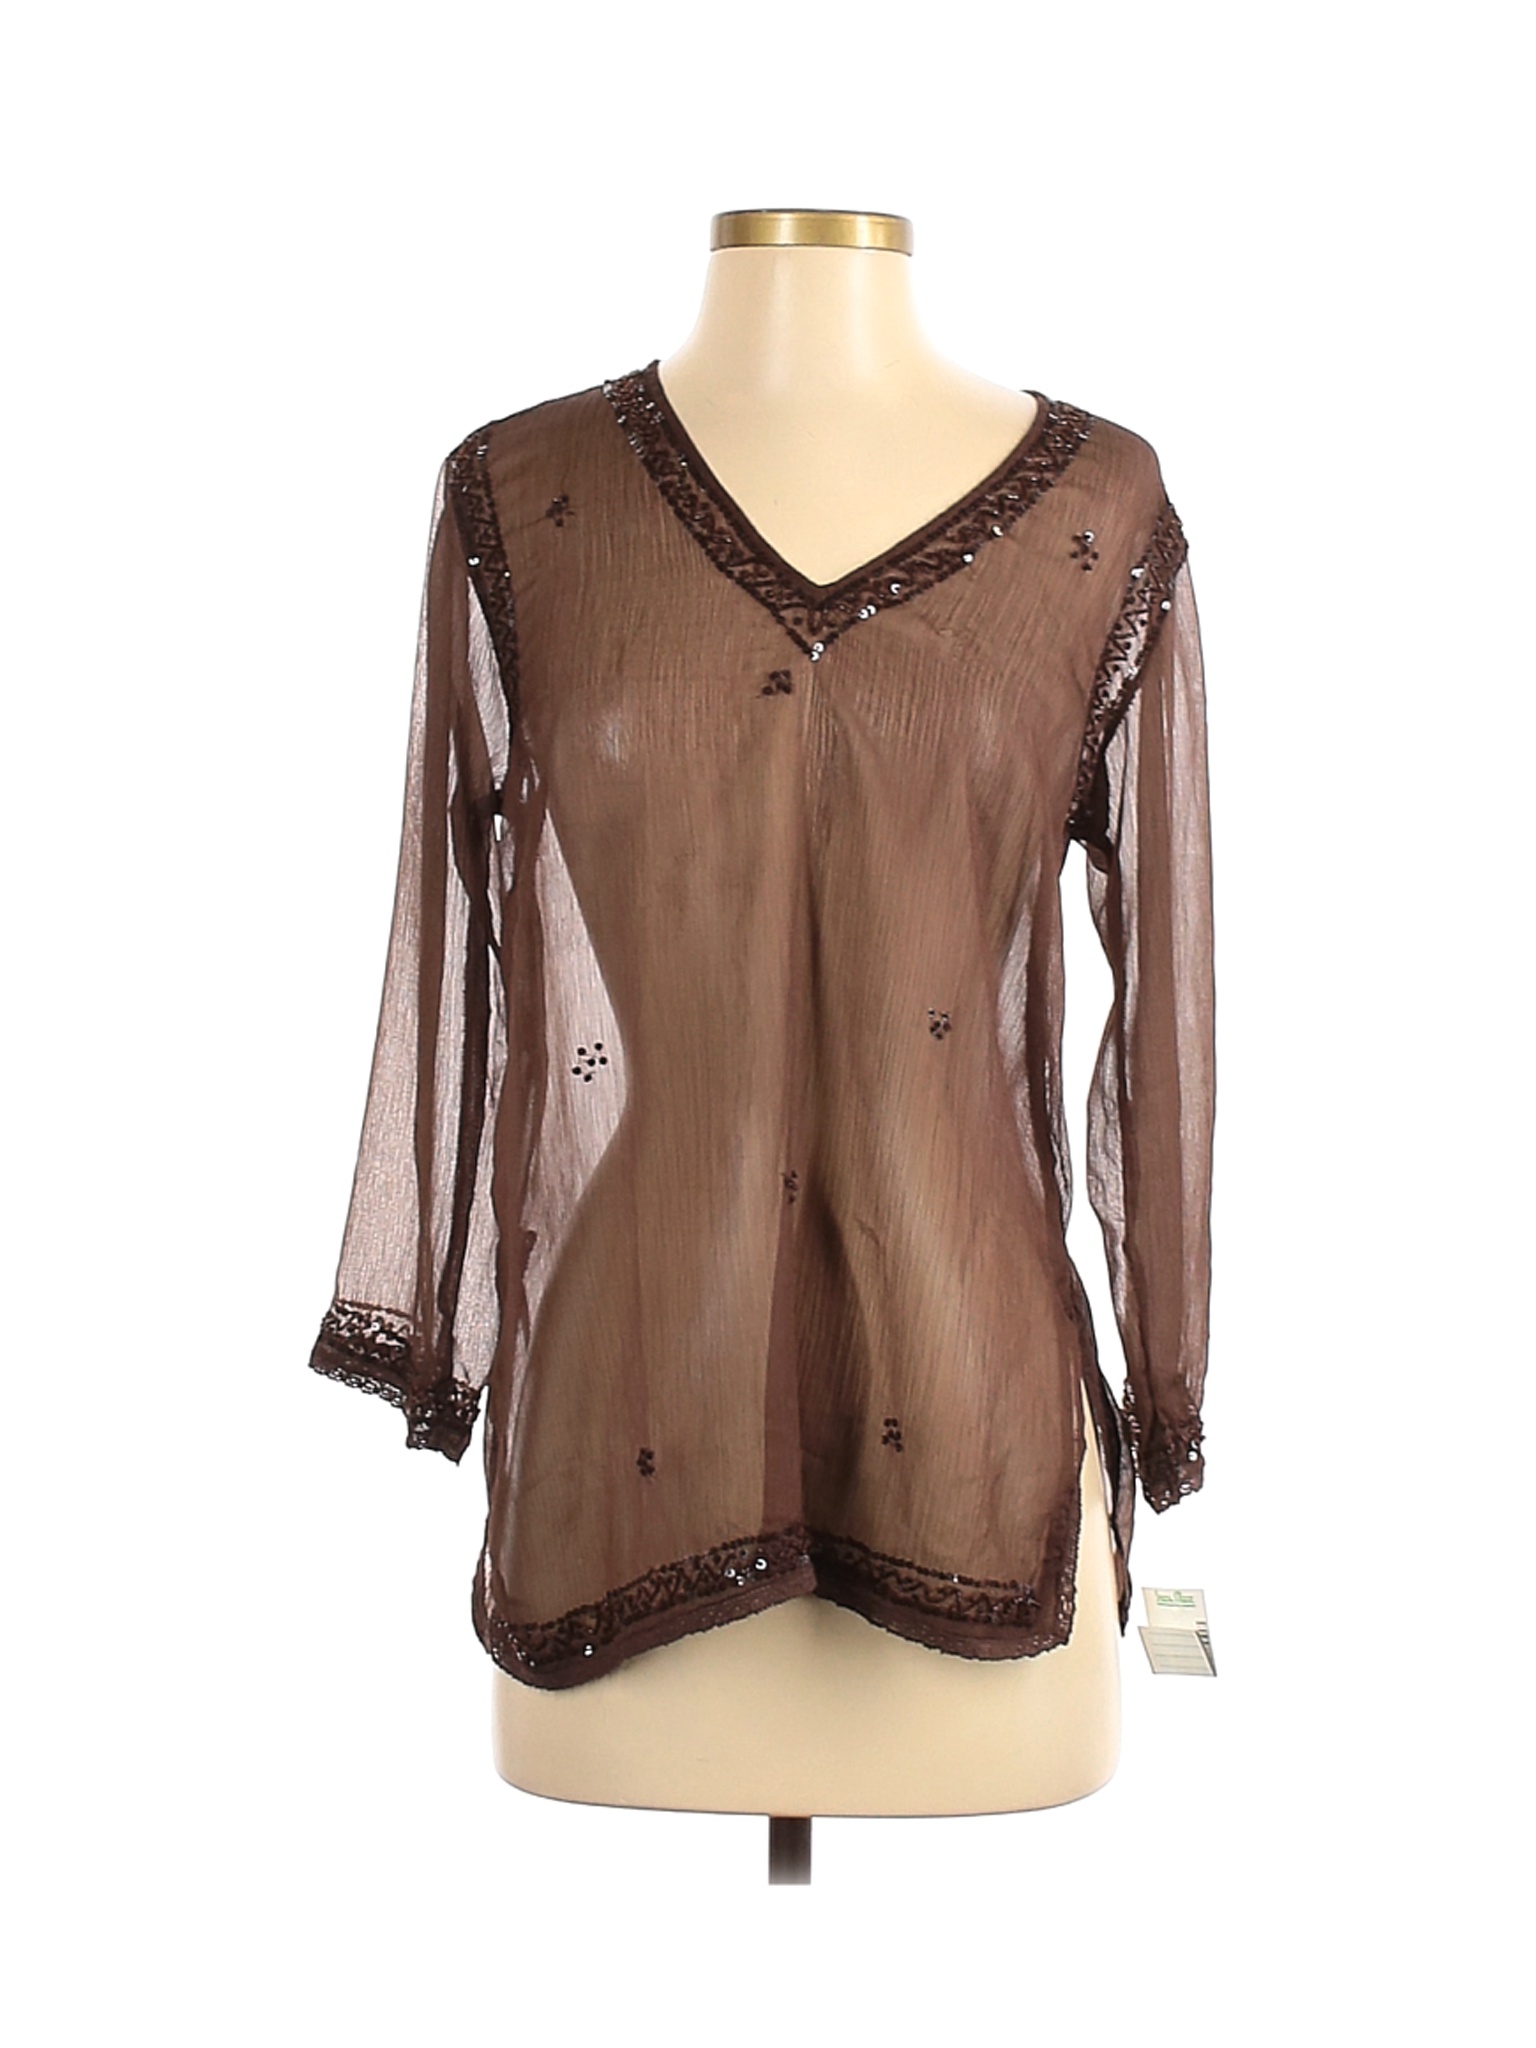 Cha Cha Vente Women Brown Long Sleeve Blouse S eBay